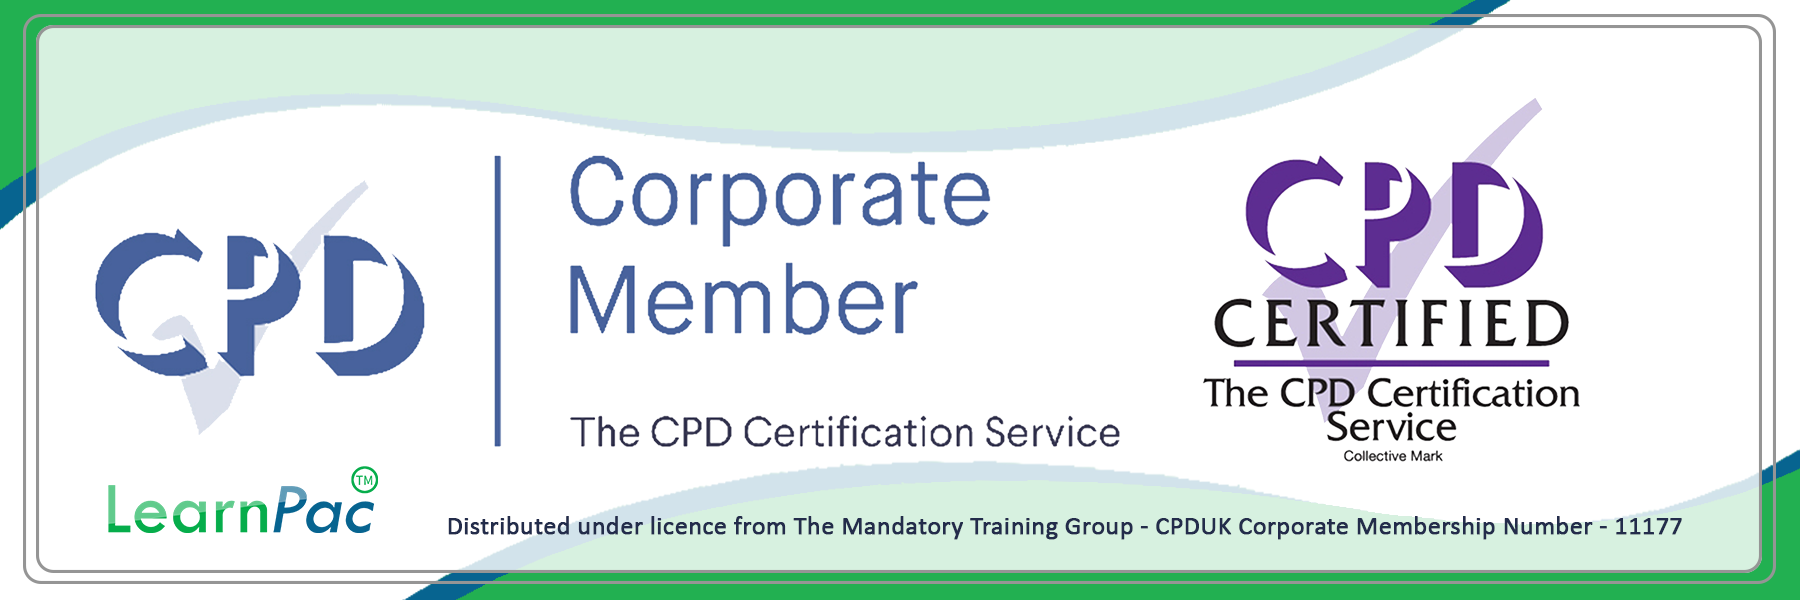 Care Certificate Standard 3 - CPDUK Certified - Learnpac System UK - 